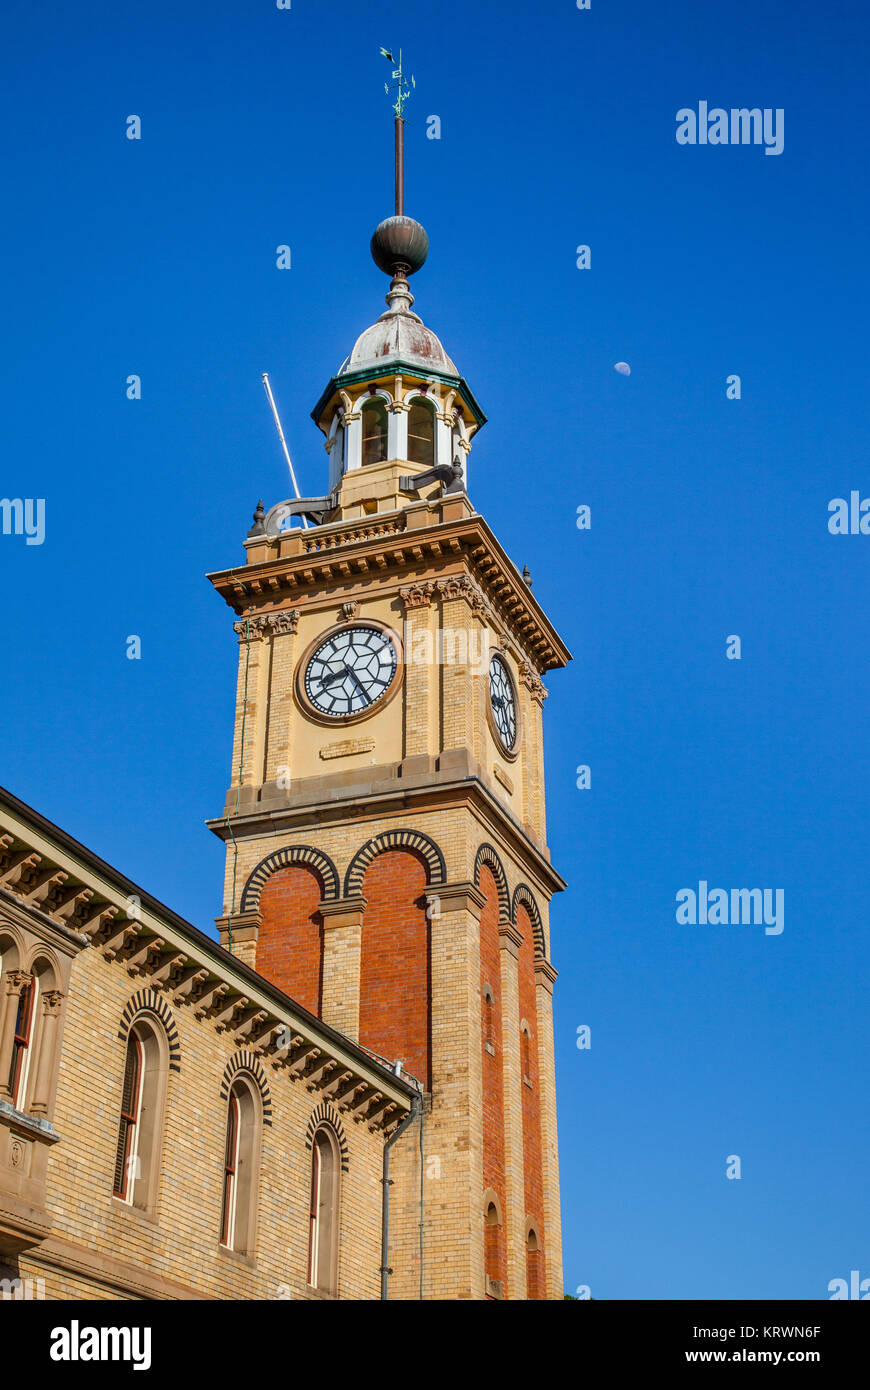 Australien, New South Wales, Newcastle, Newcastle Customs House von 1877, in Italianite Renaissance Revival Stil mit dem kultigen Uhr konzipiert Stockfoto